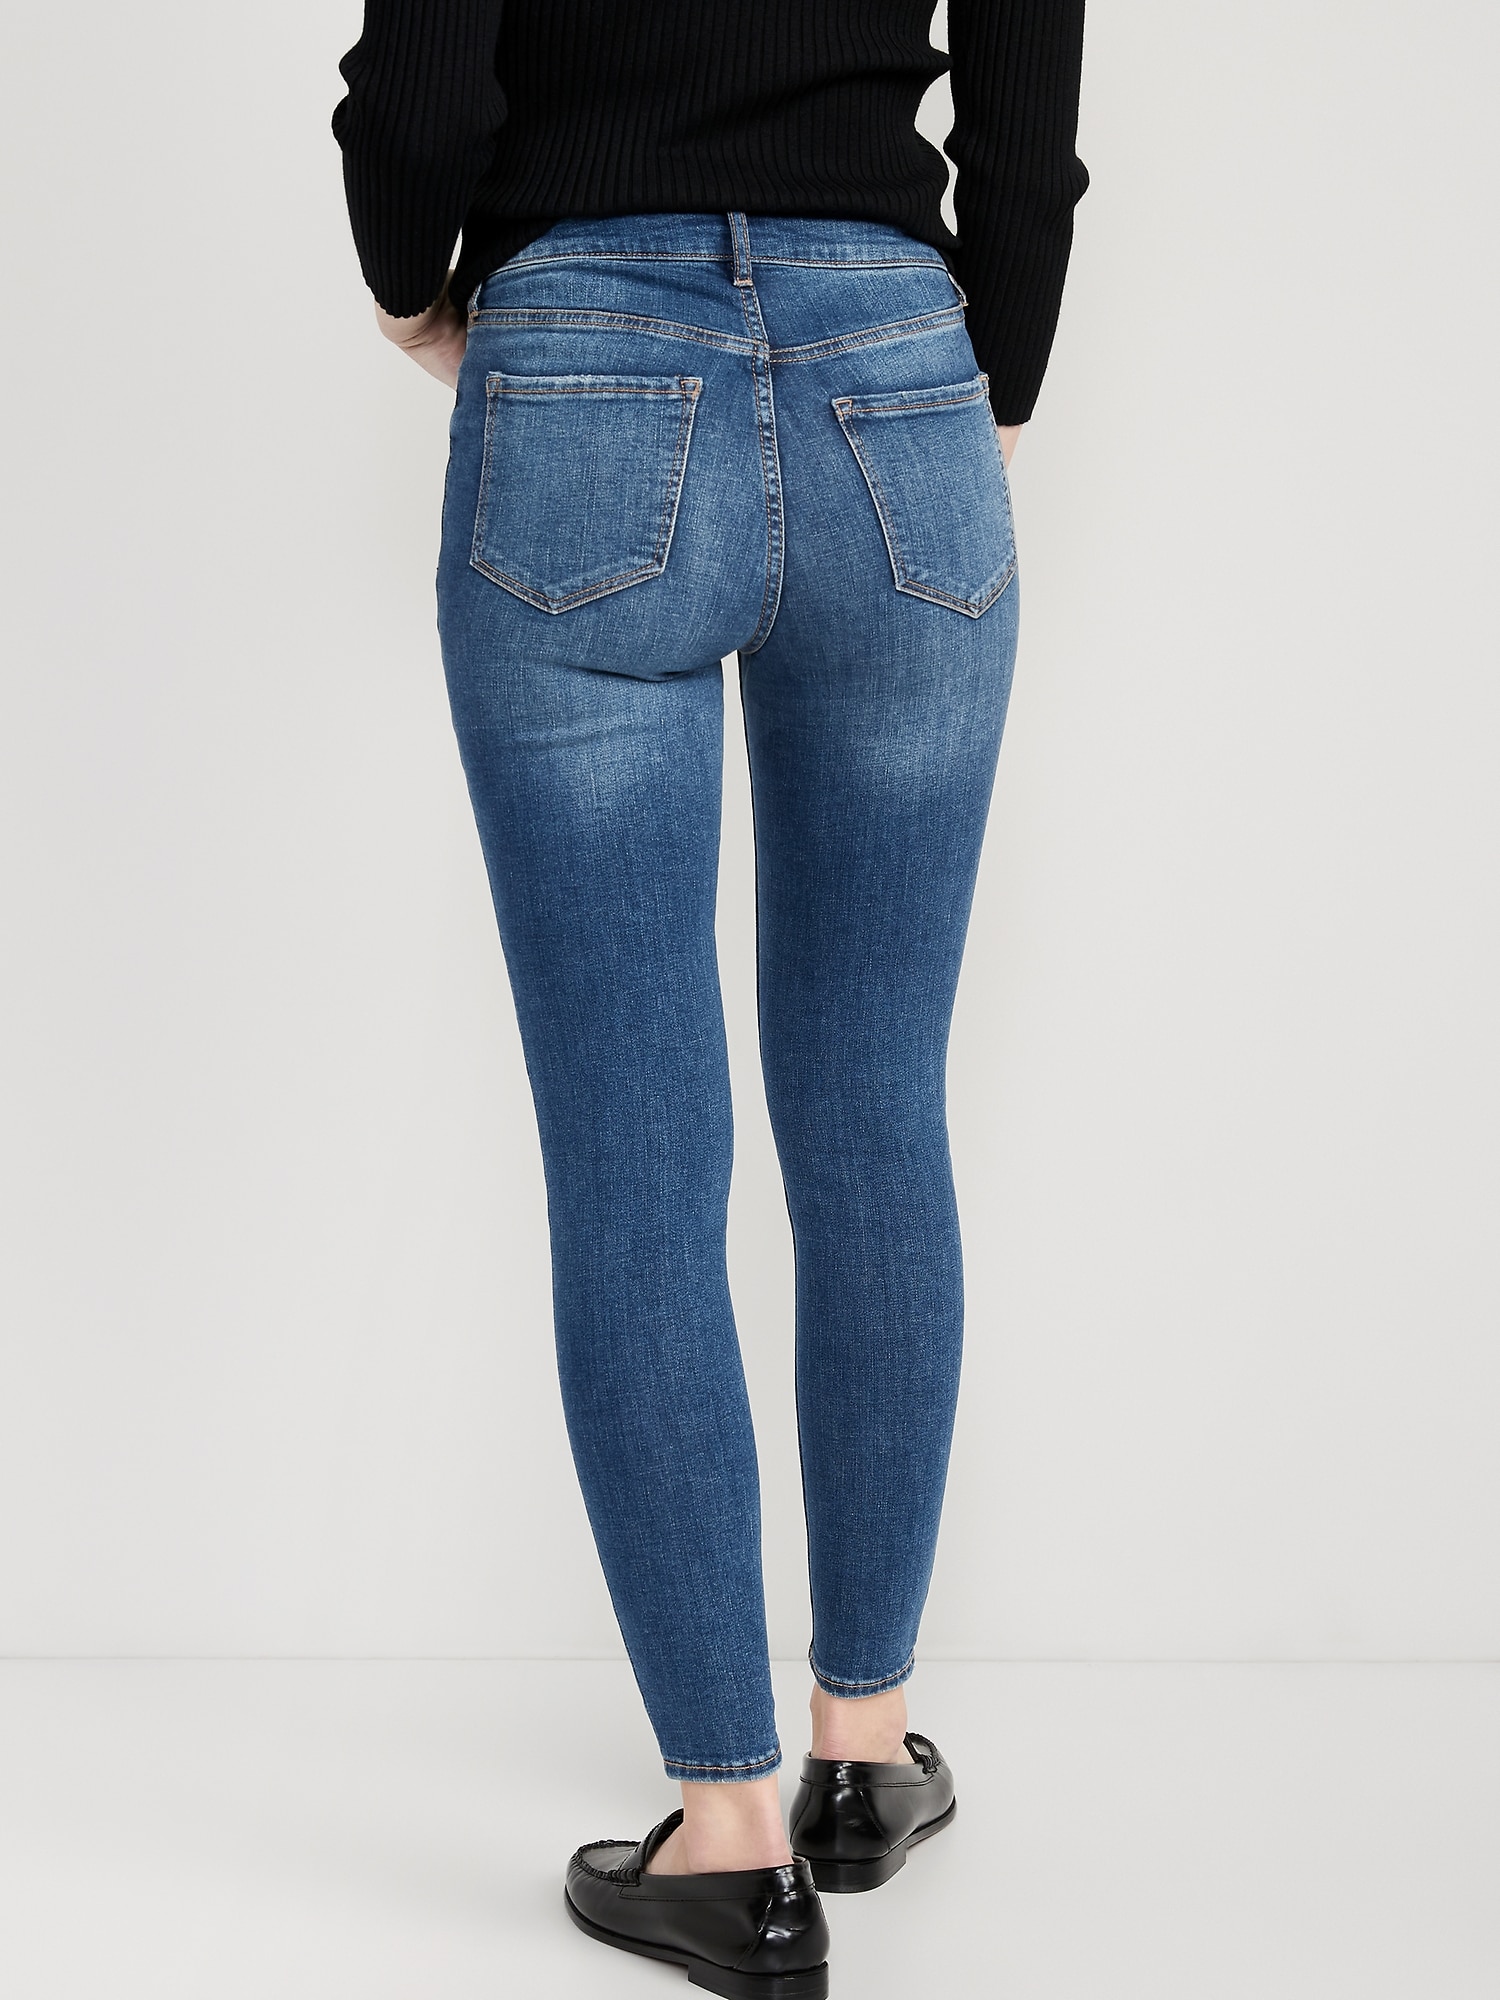 Women's High-Rise Medium Wash Super Skinny Jeans, Women's Bottoms